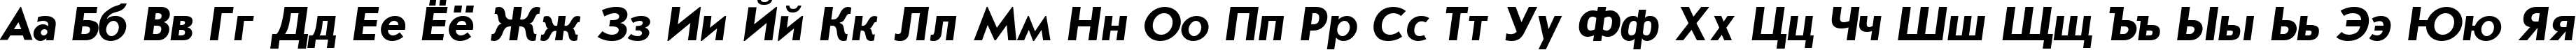 Пример написания русского алфавита шрифтом Journal SansSerif Bold Italic:001.001